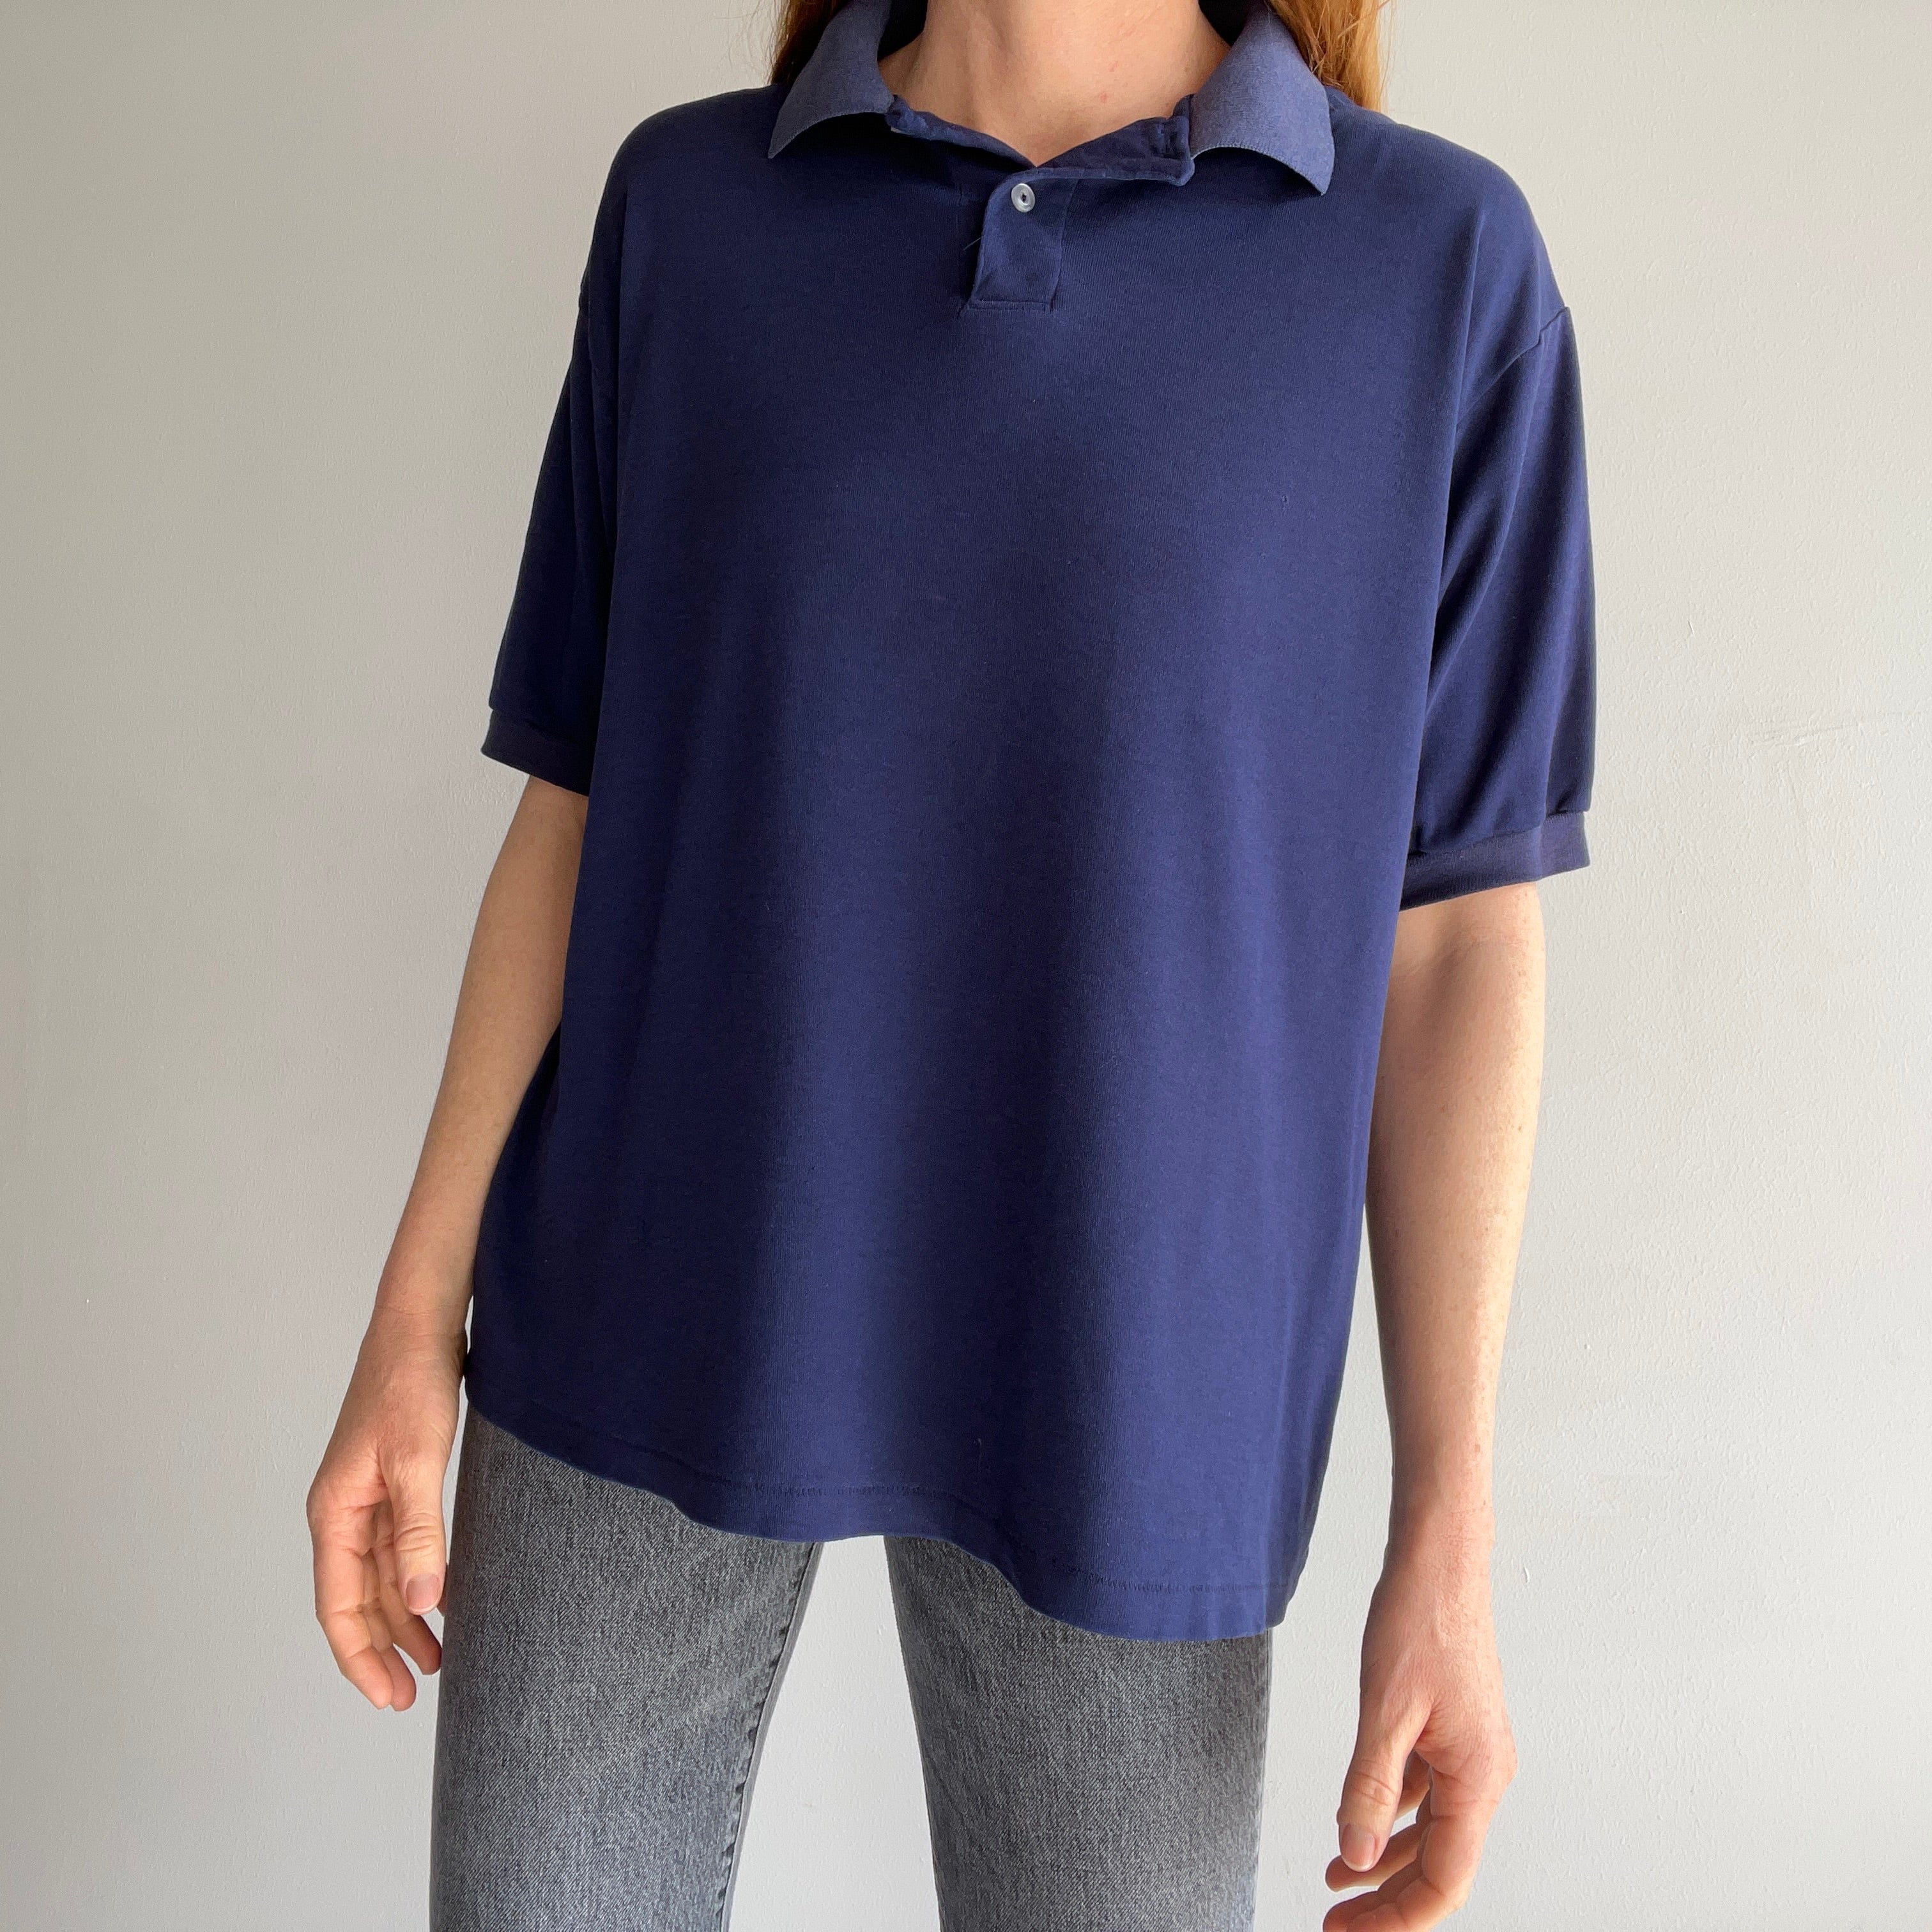 1990s Blank Navy Polo Shirt - Soft Jersey